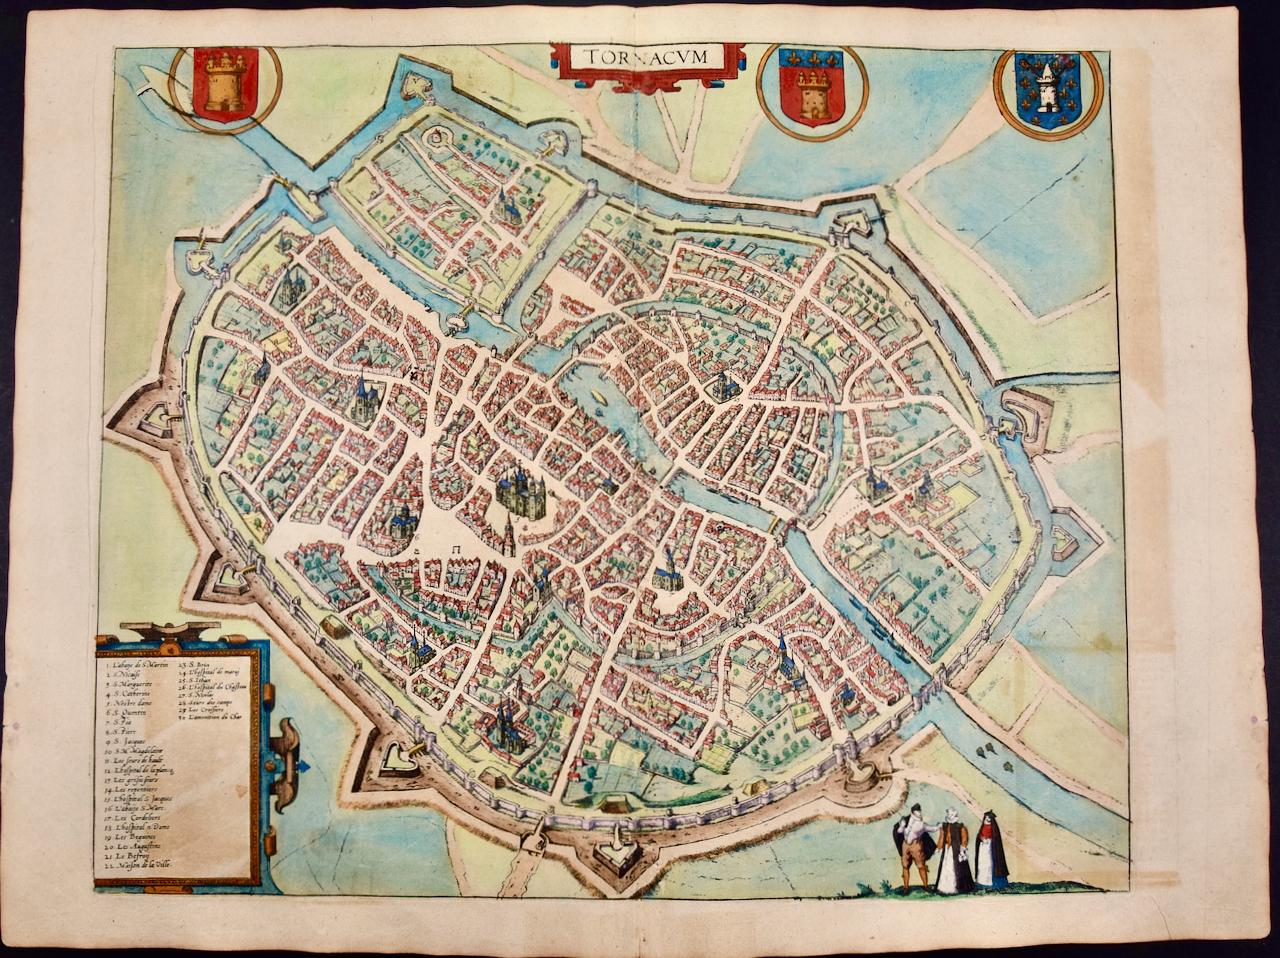 Frans Hogenberg Landscape Print - Tournai (Tournay), Belgium: A 16th Century Hand-colored Map by Braun & Hogenberg